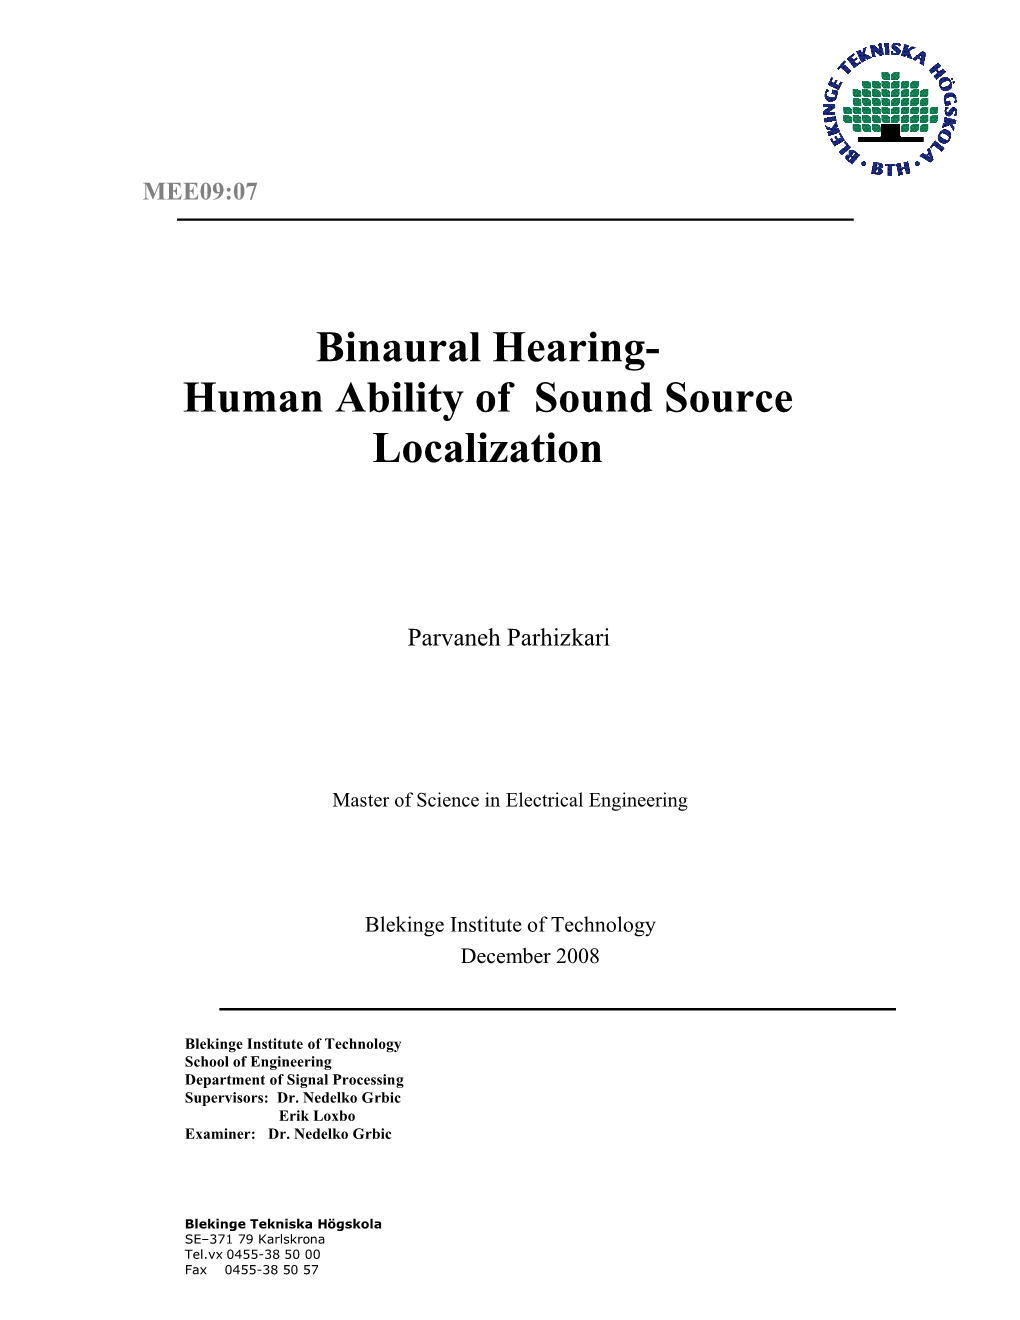 Binaural Hearing- Human Ability of Sound Source Localization